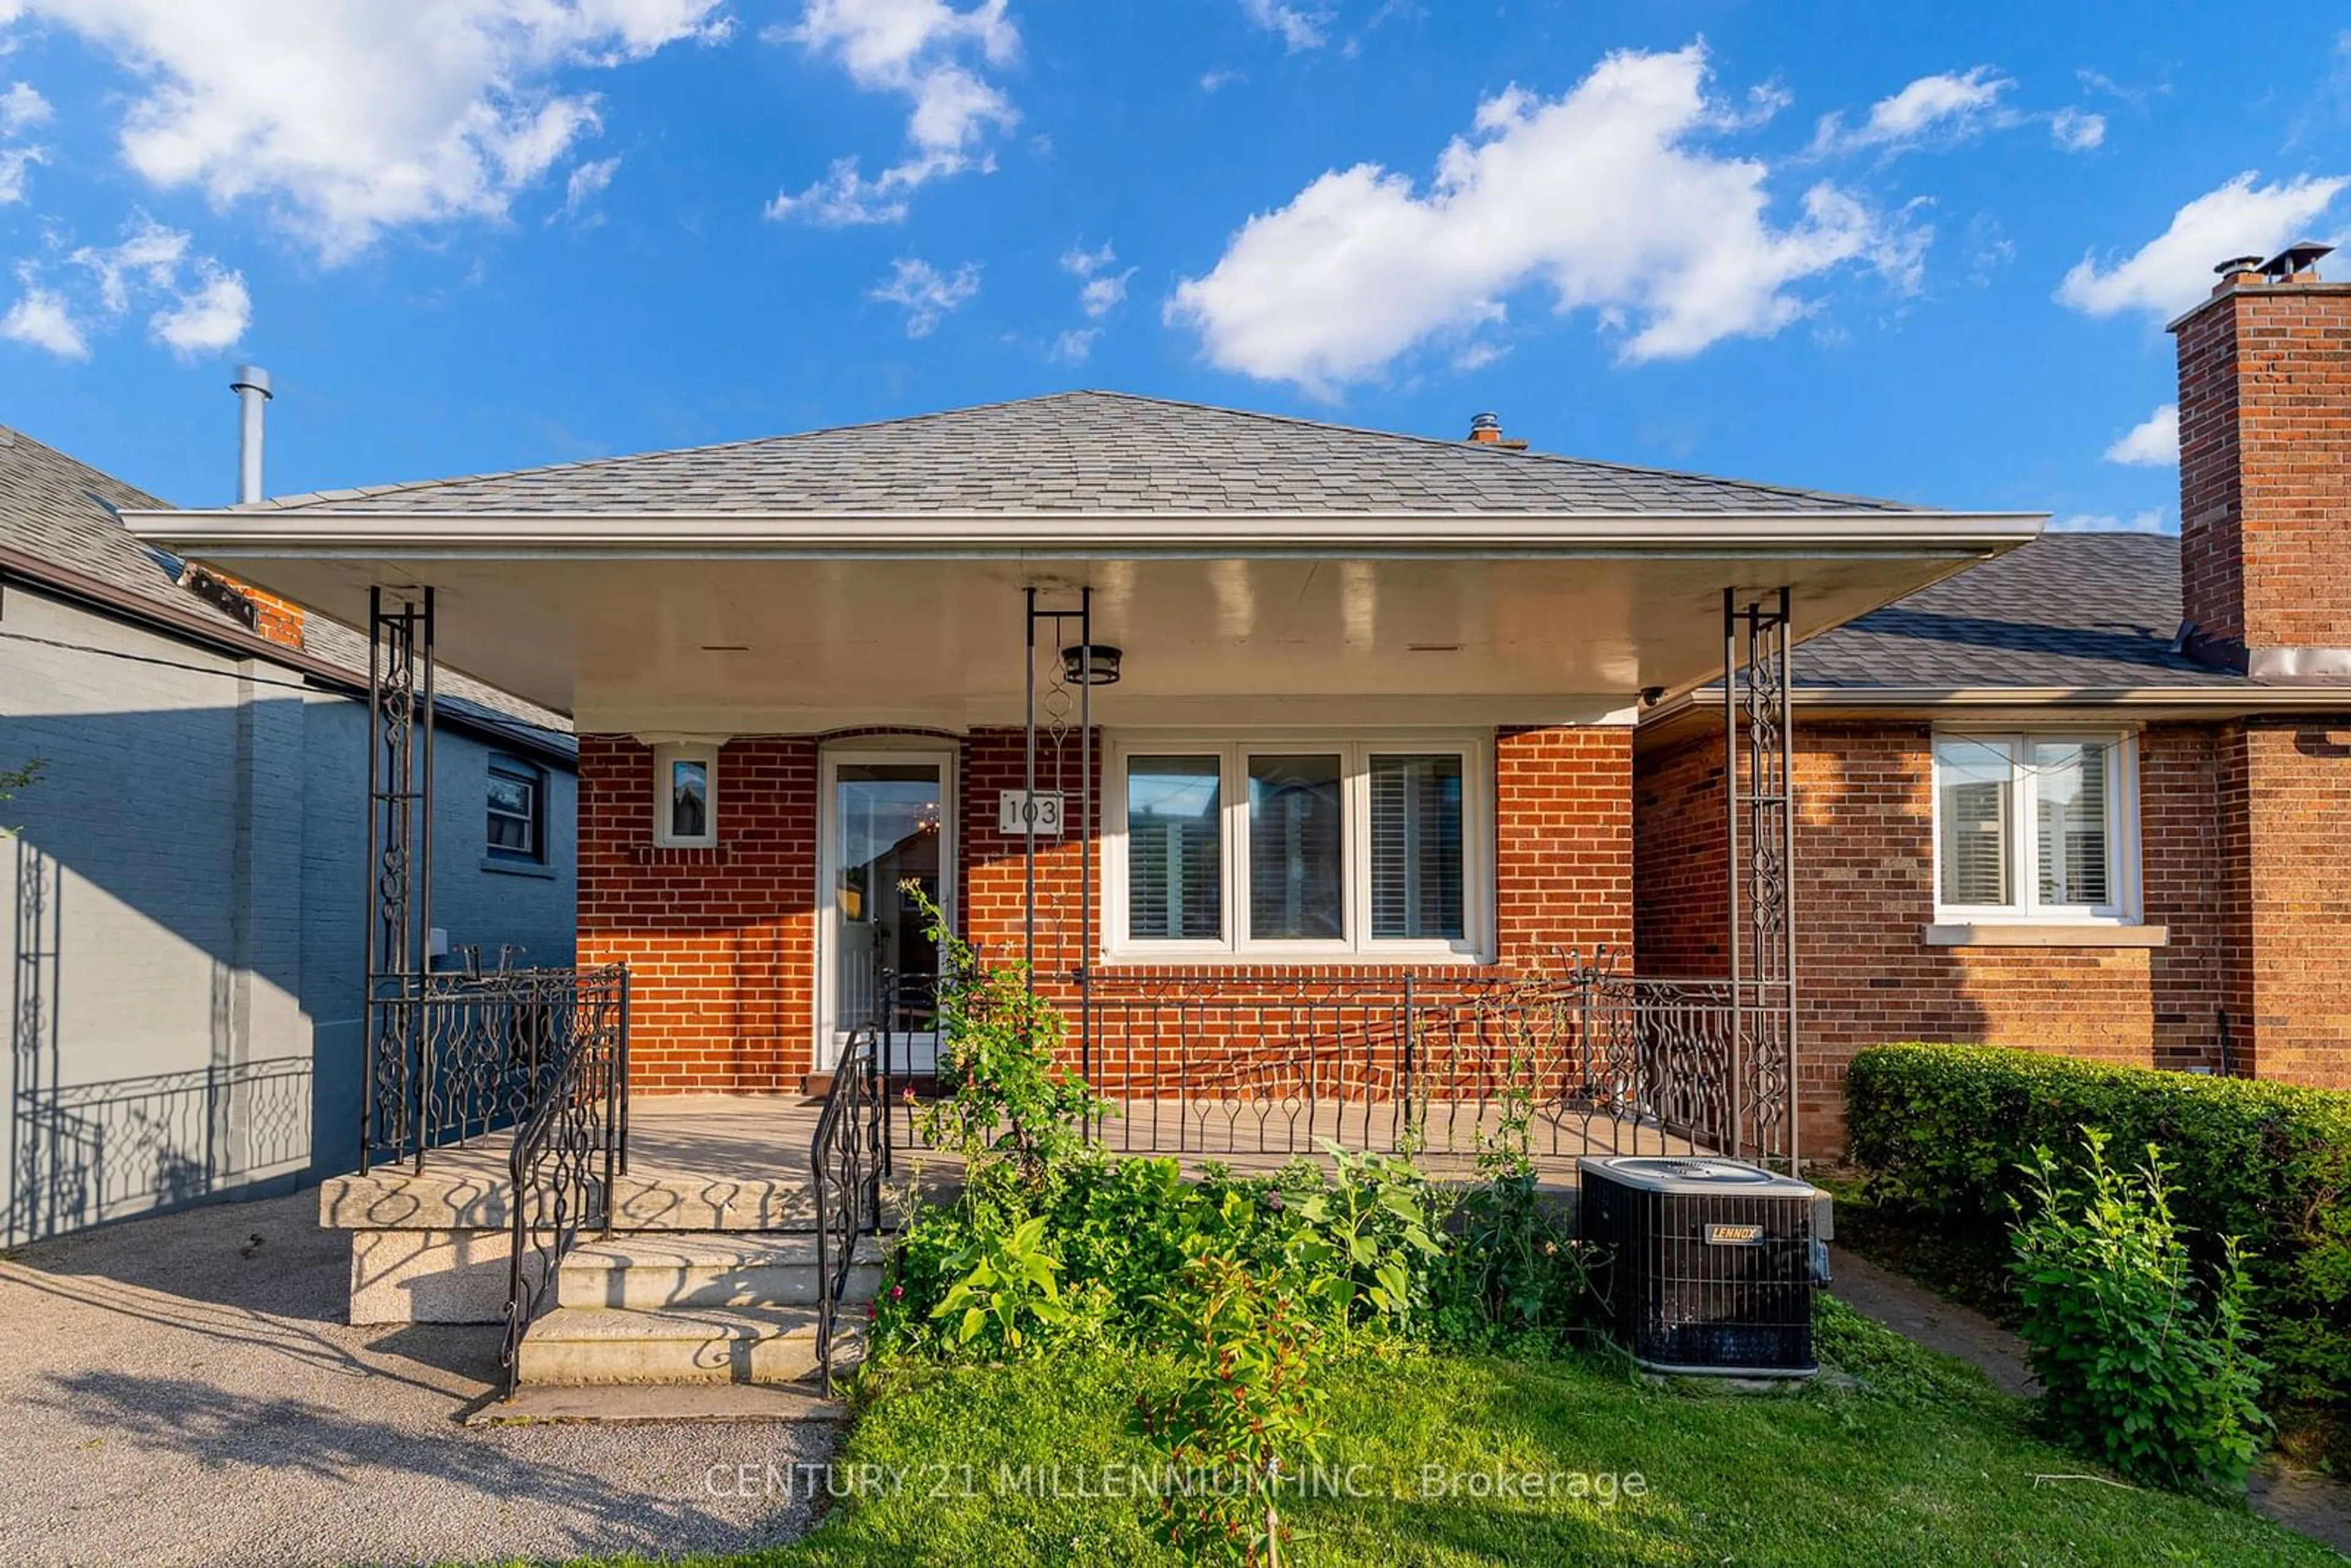 Home with brick exterior material for 103 Lonborough Ave, Toronto Ontario M6M 1X7